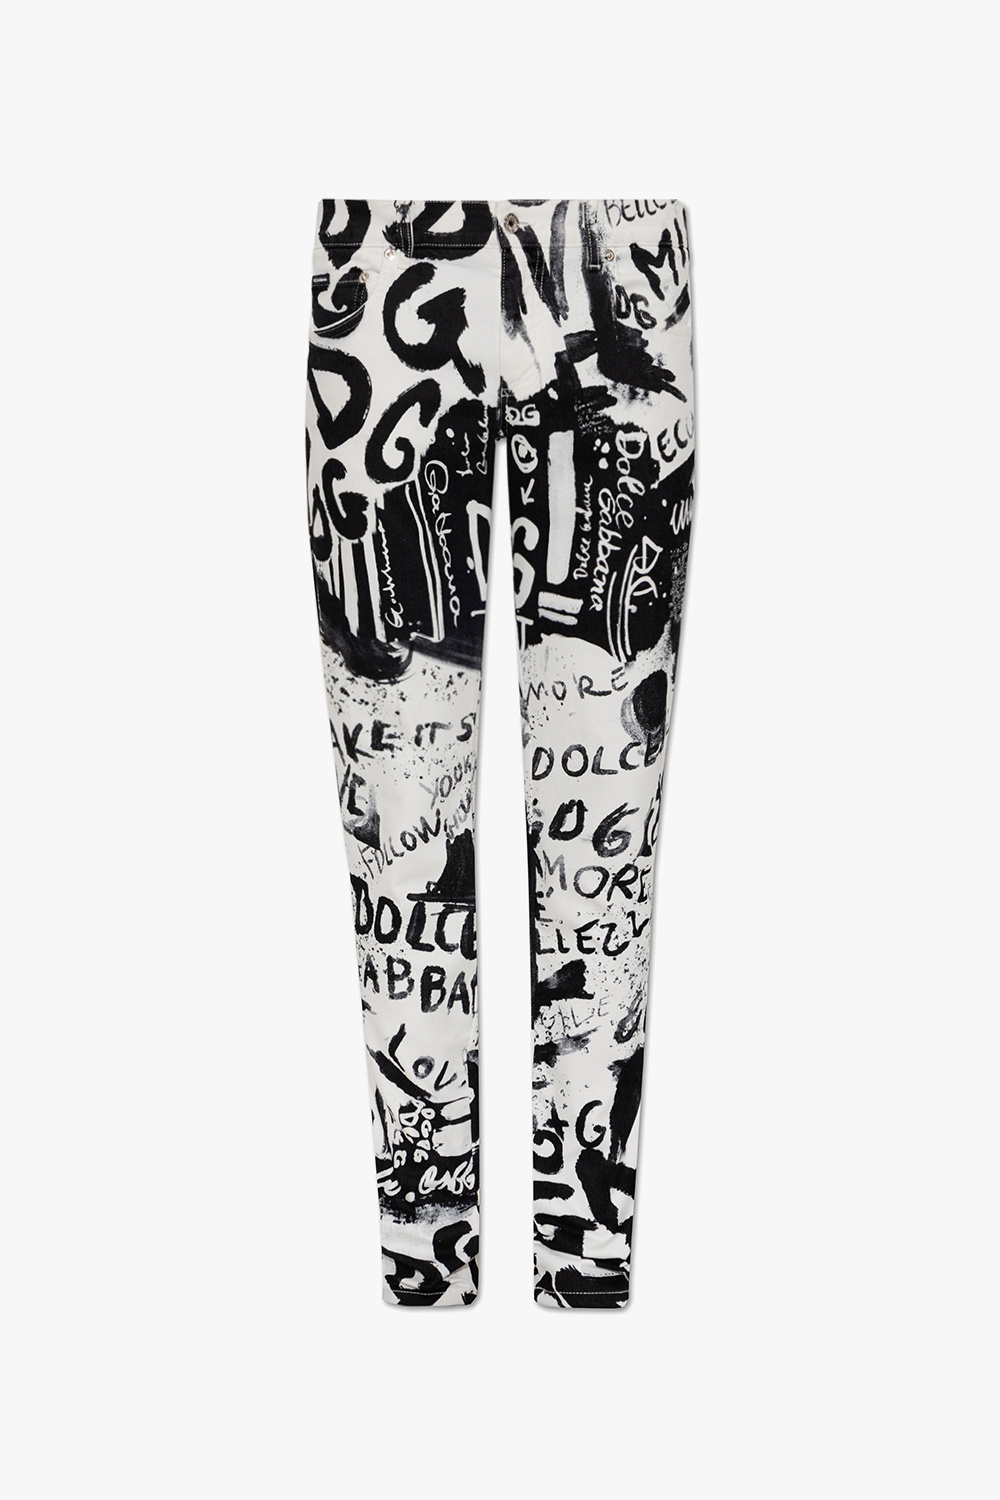 Dolce & Gabbana Skinny pants for Women